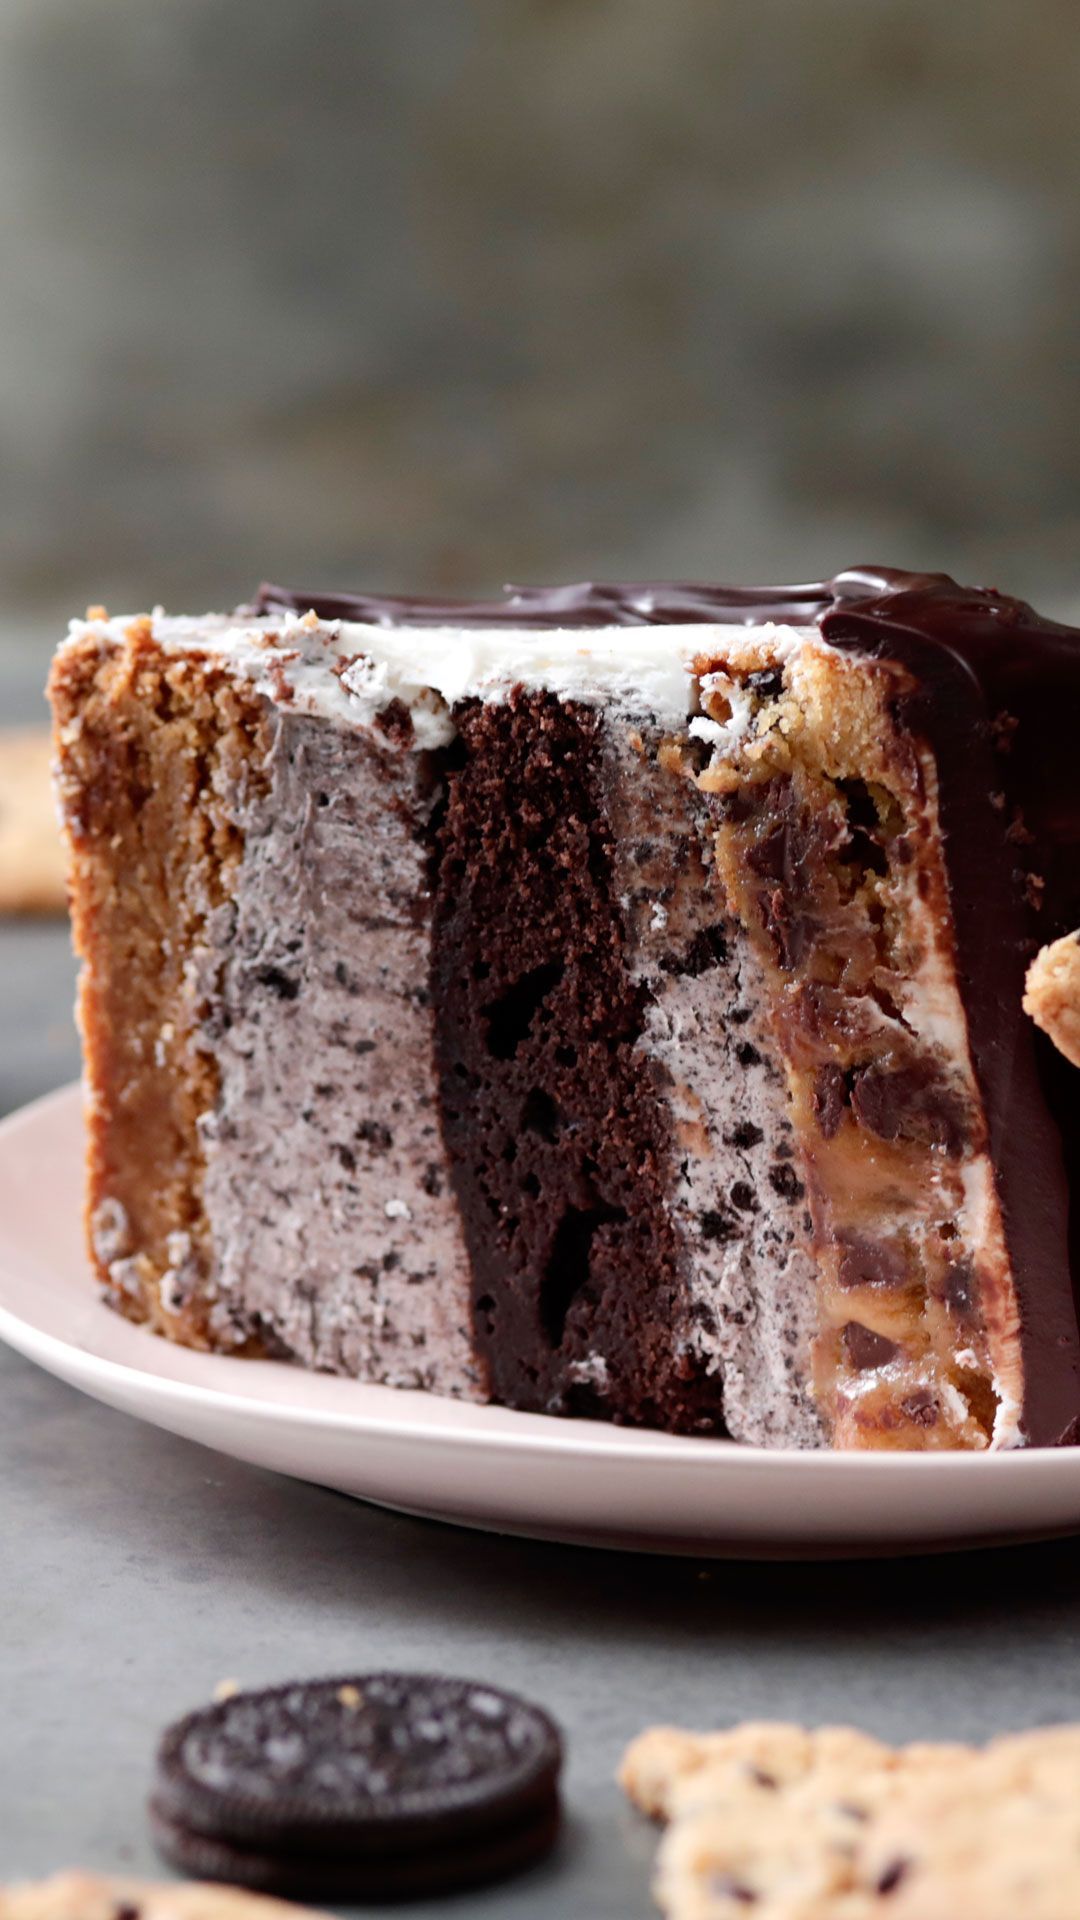 15 desserts Chocolate delicious ideas